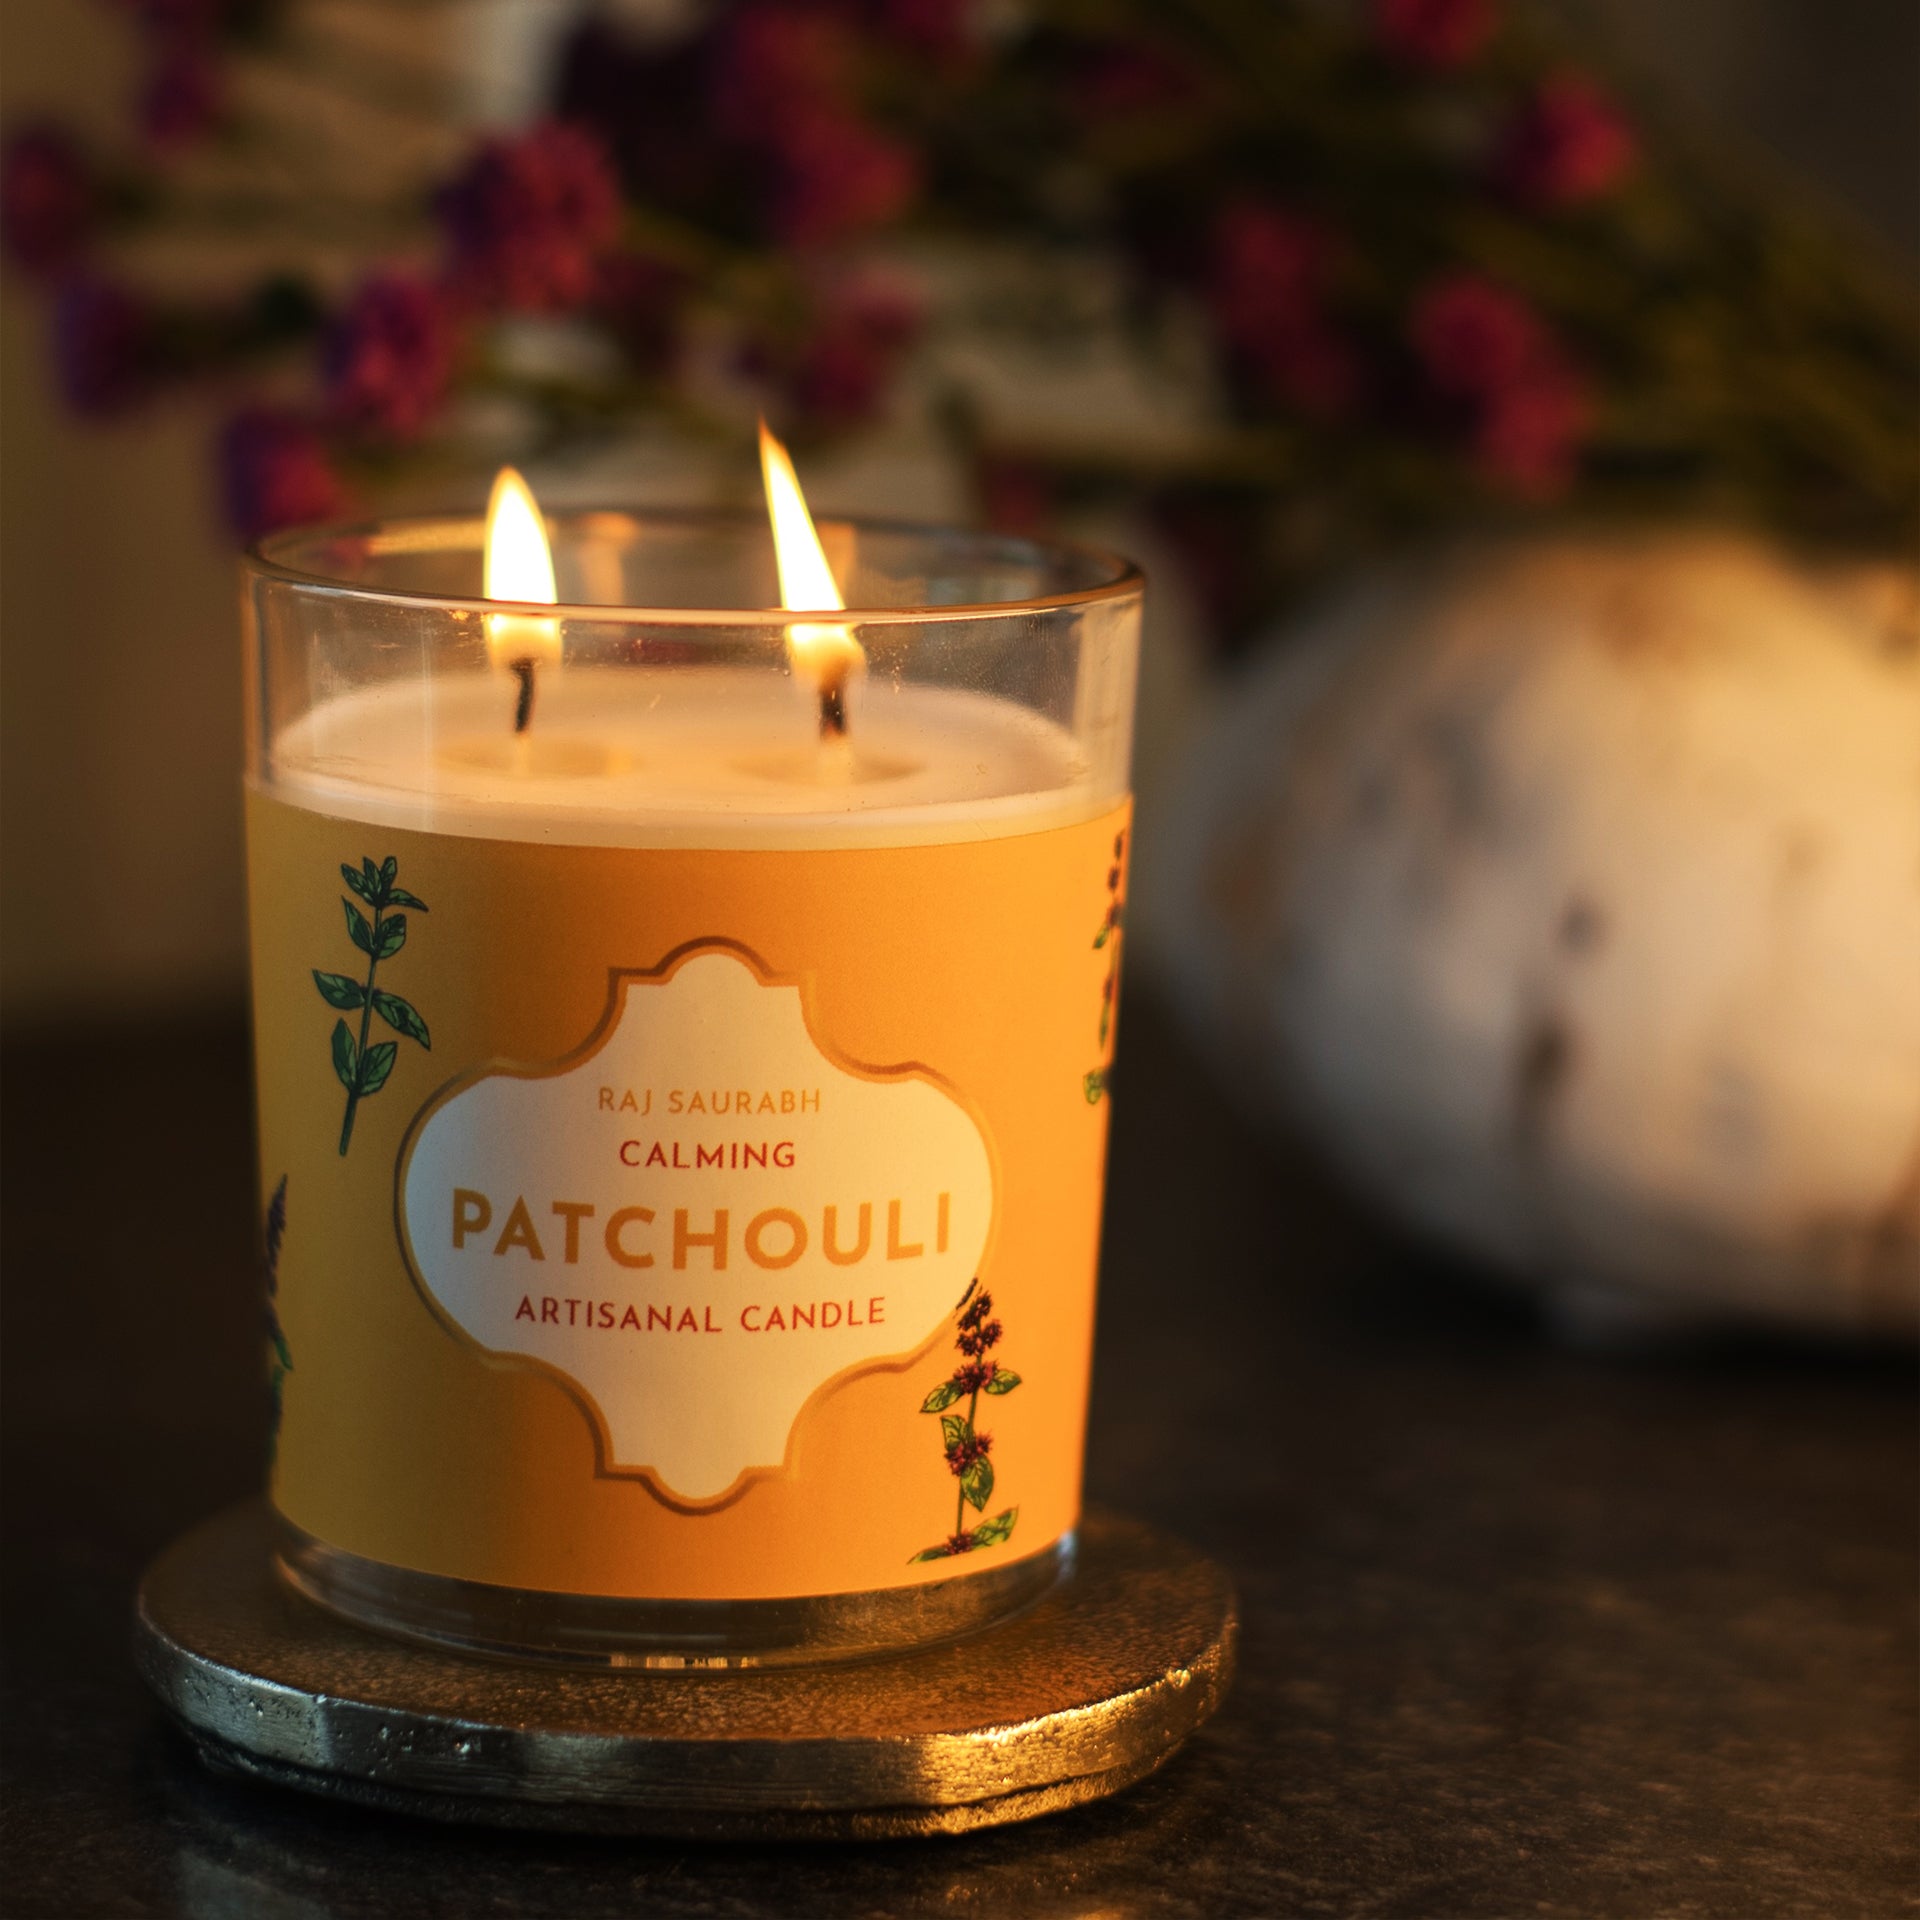 Patchouli Artisanal Candle